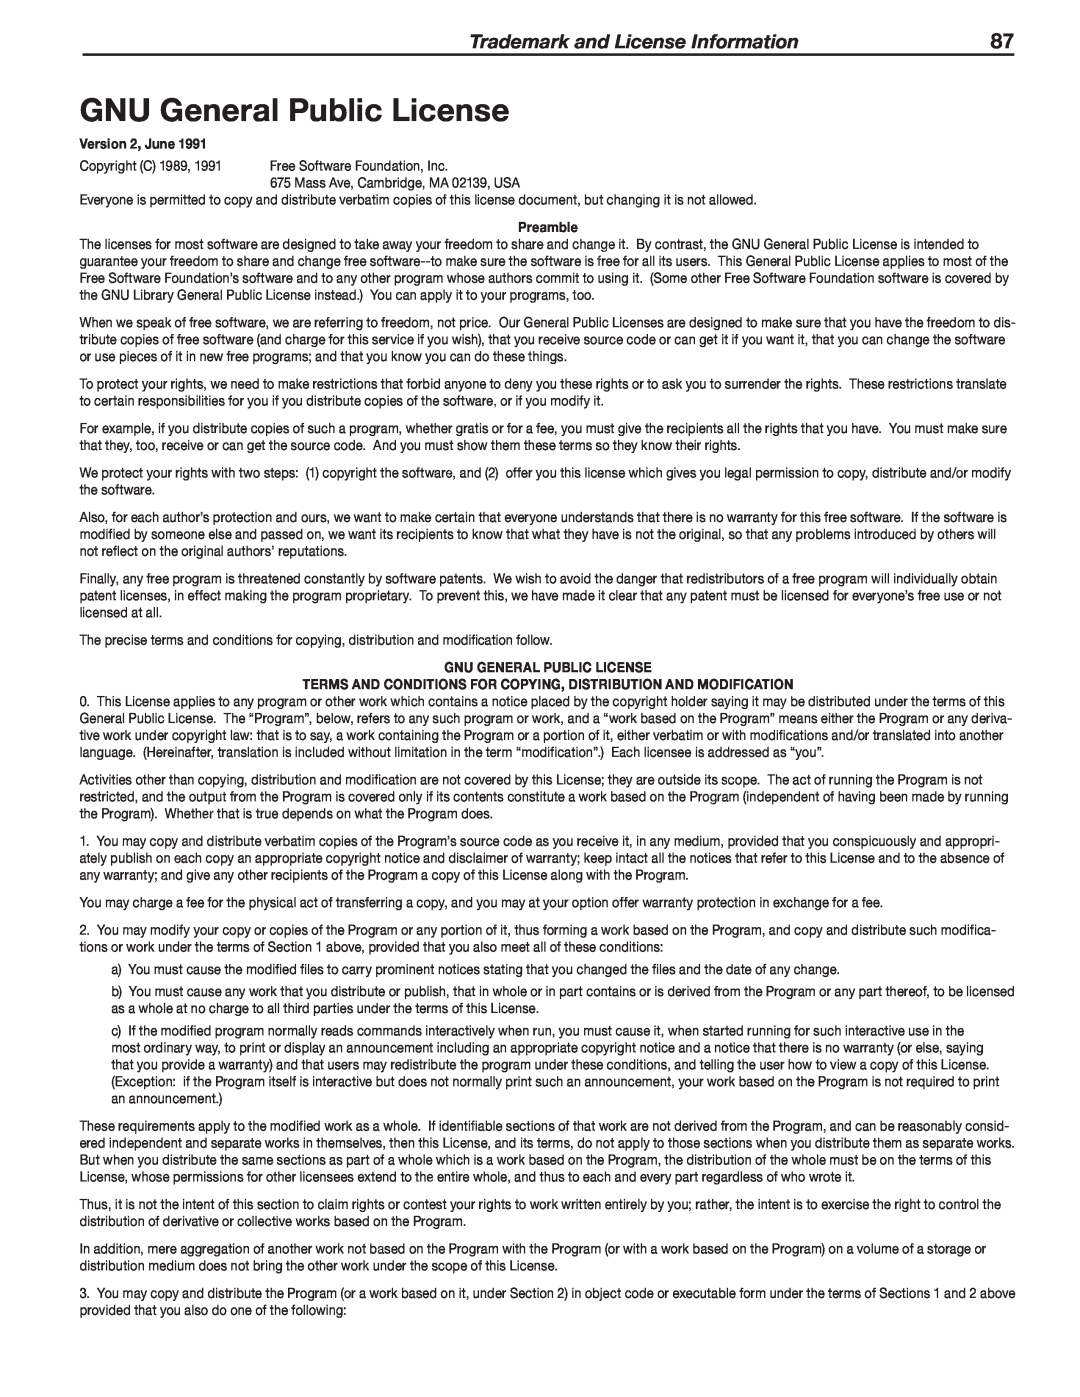 Mitsubishi Electronics LT-40151 GNU General Public License, Trademark and License Information, Version 2, June, Preamble 